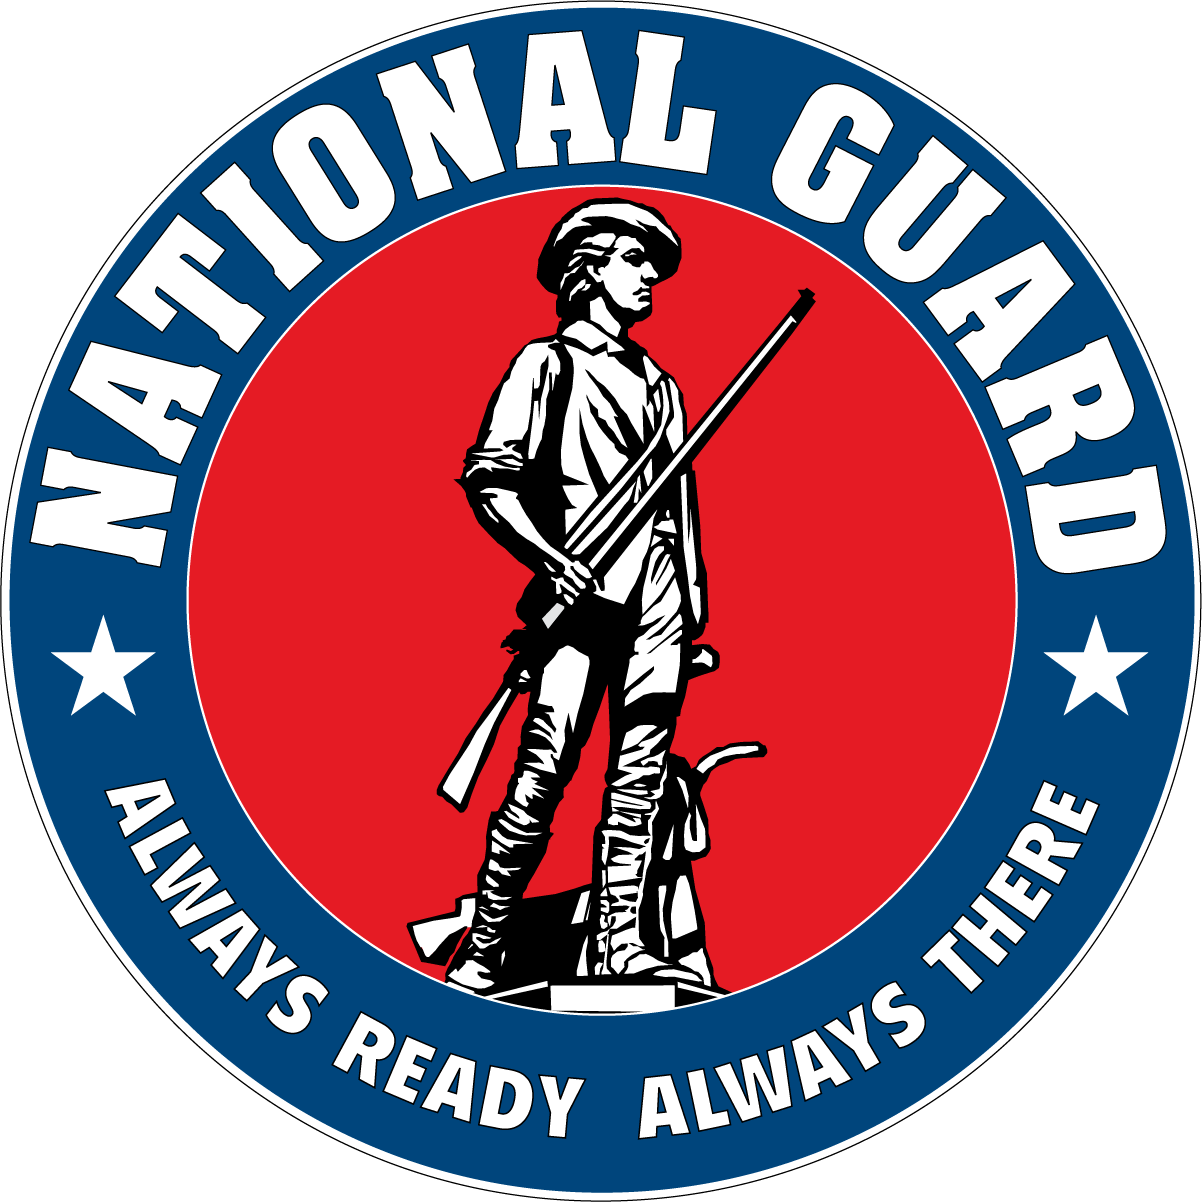 national guard